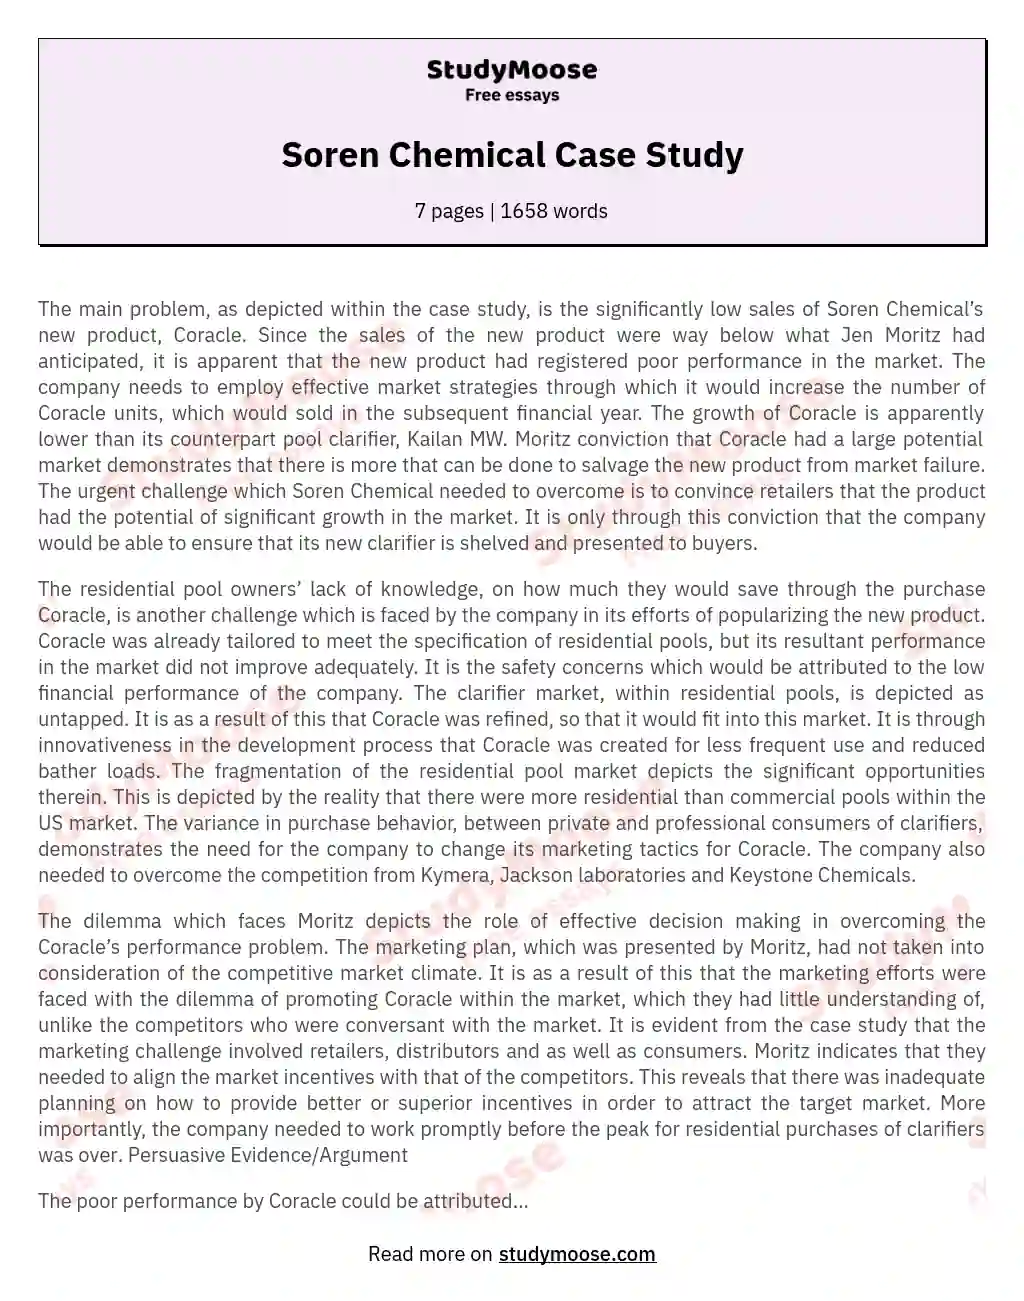 Soren Chemical Case Study essay